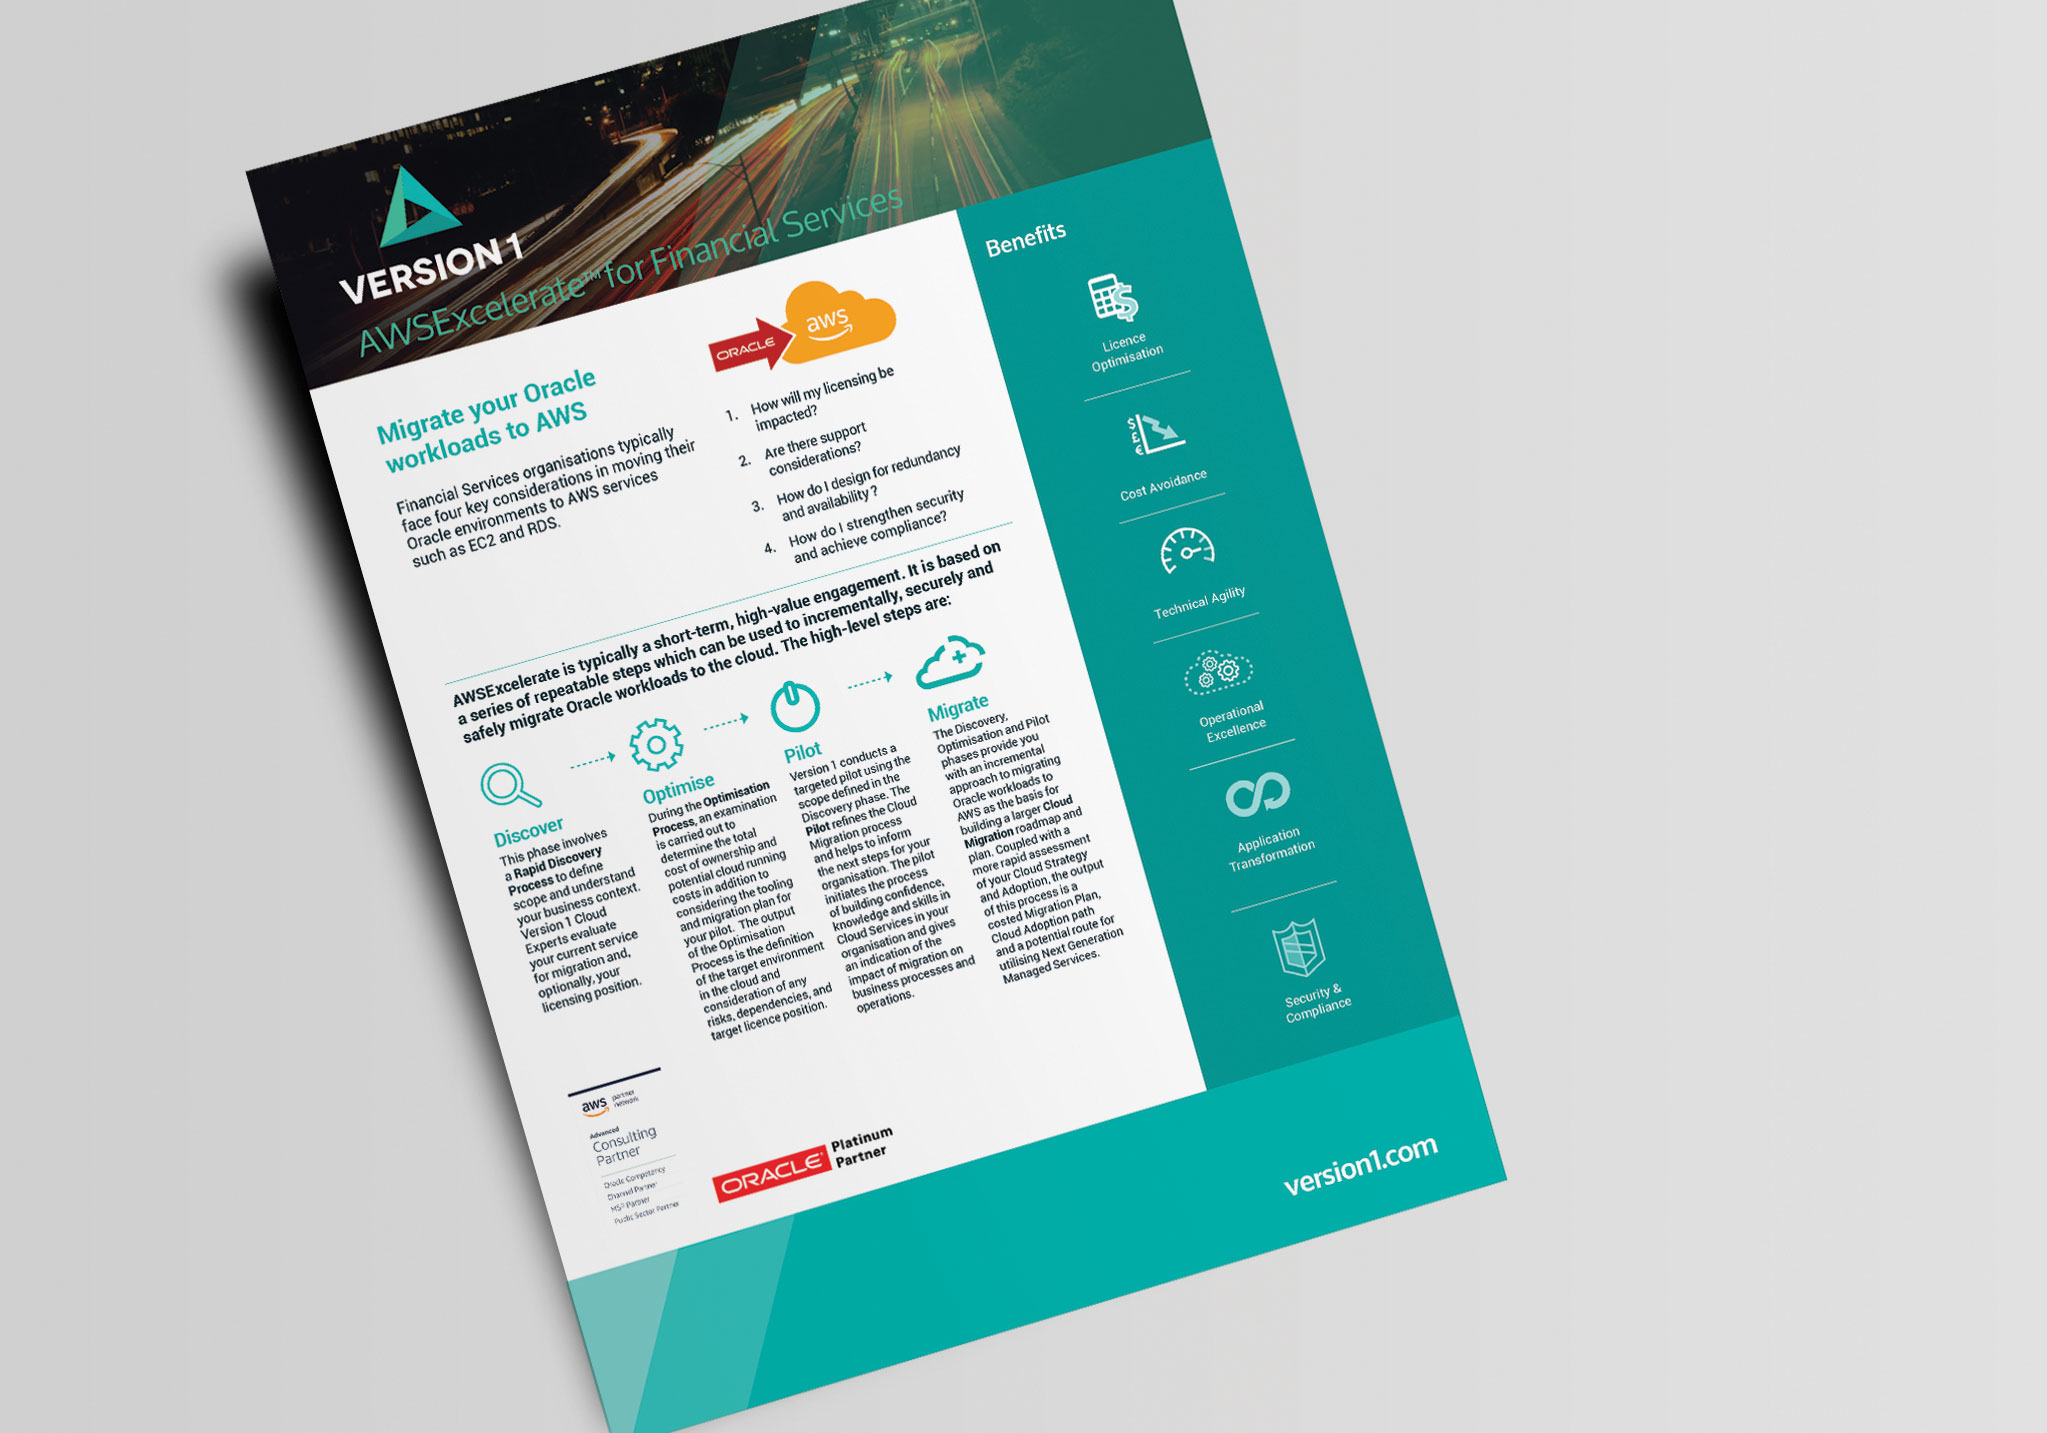 Information leaflet design for version 1 with technical information